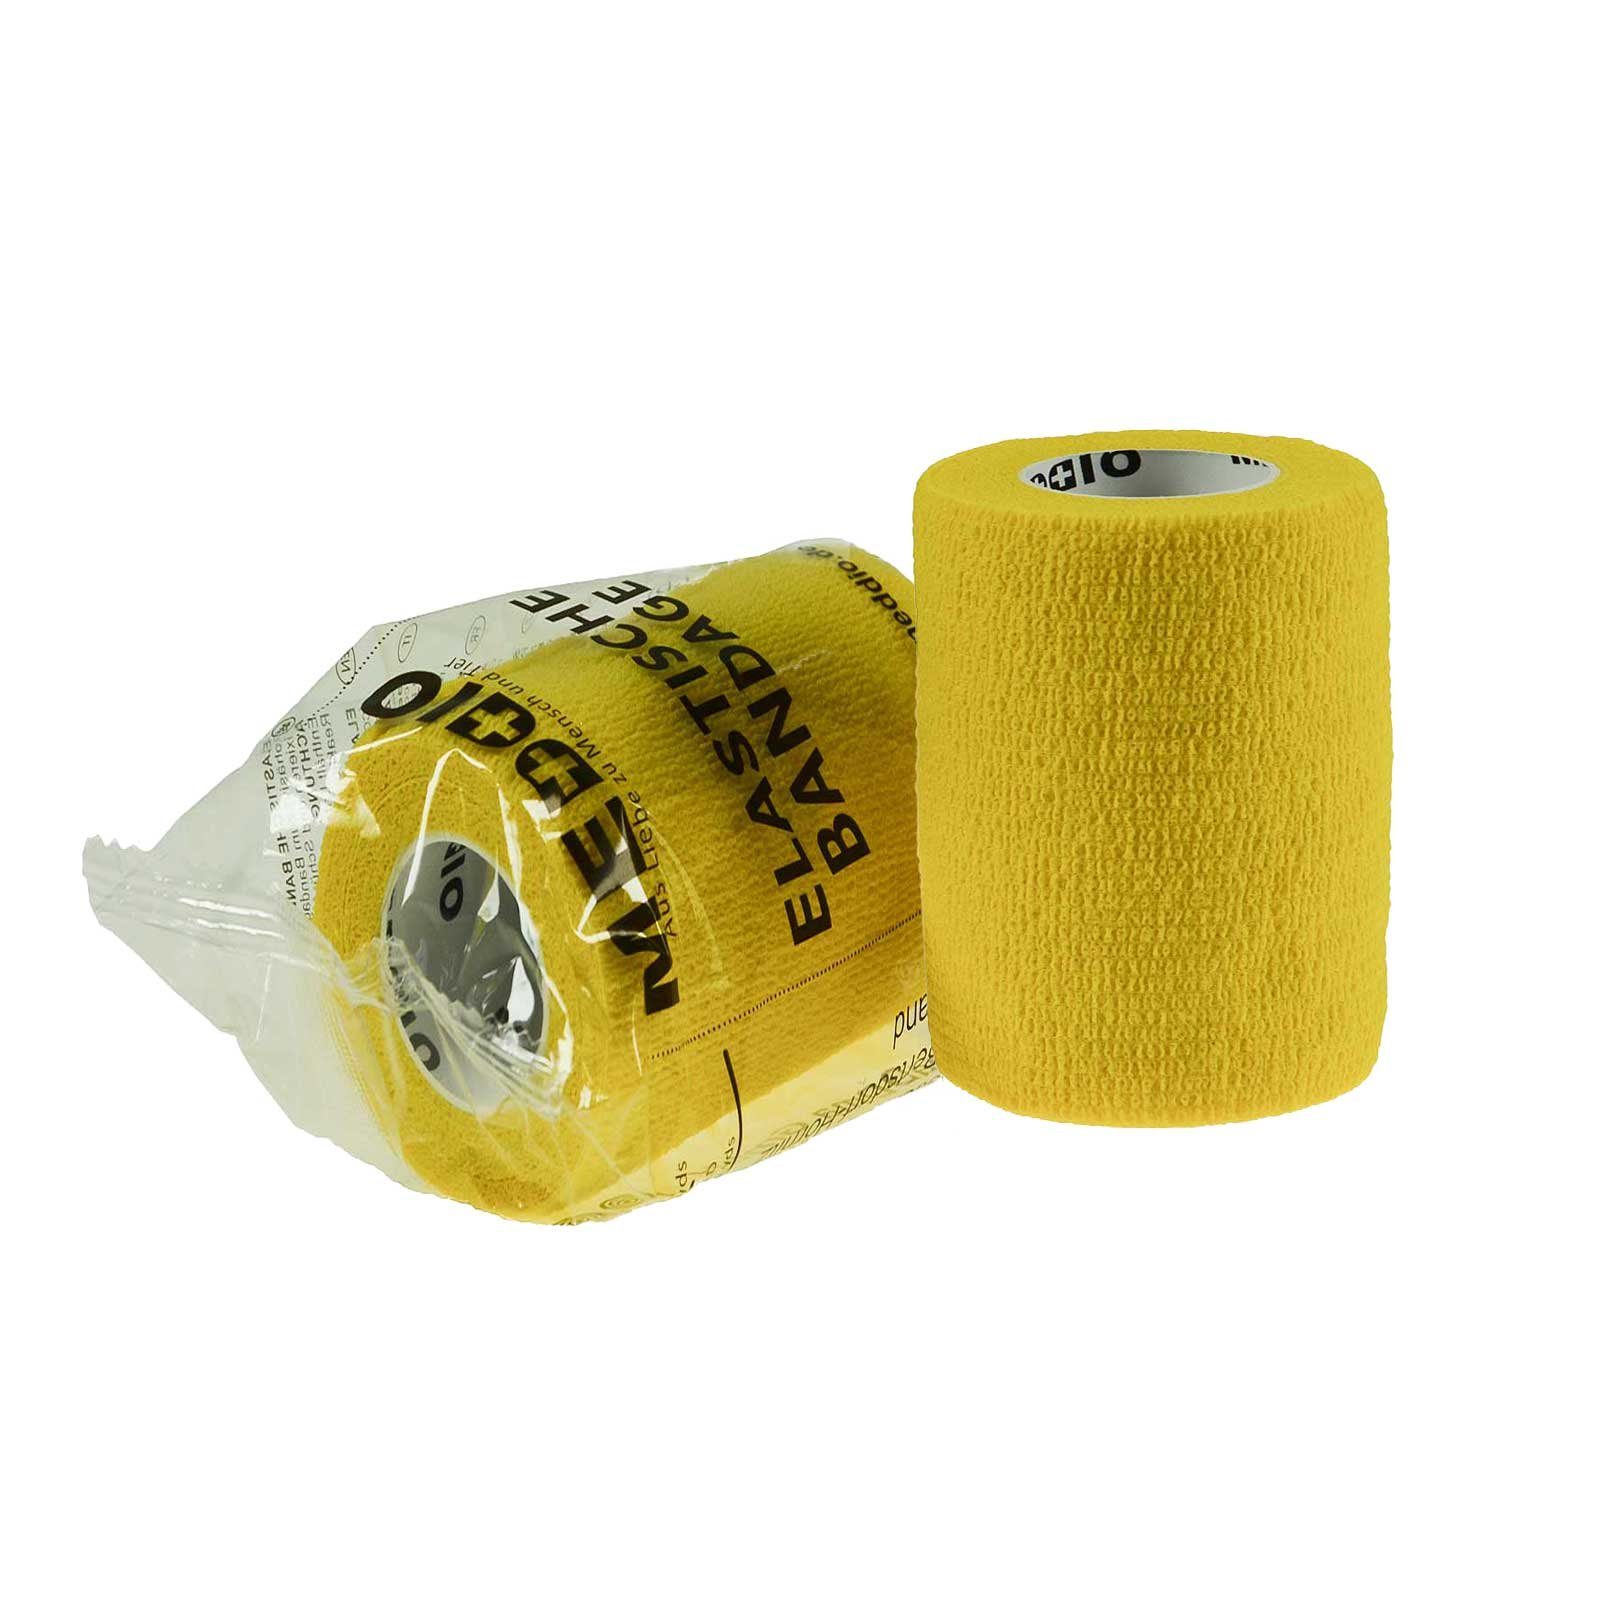 x 1 Selbsthaftende Fixierbinde Haftbandage / gelb meDDio 7,5cm 4,5m Bandage Pferdebandage